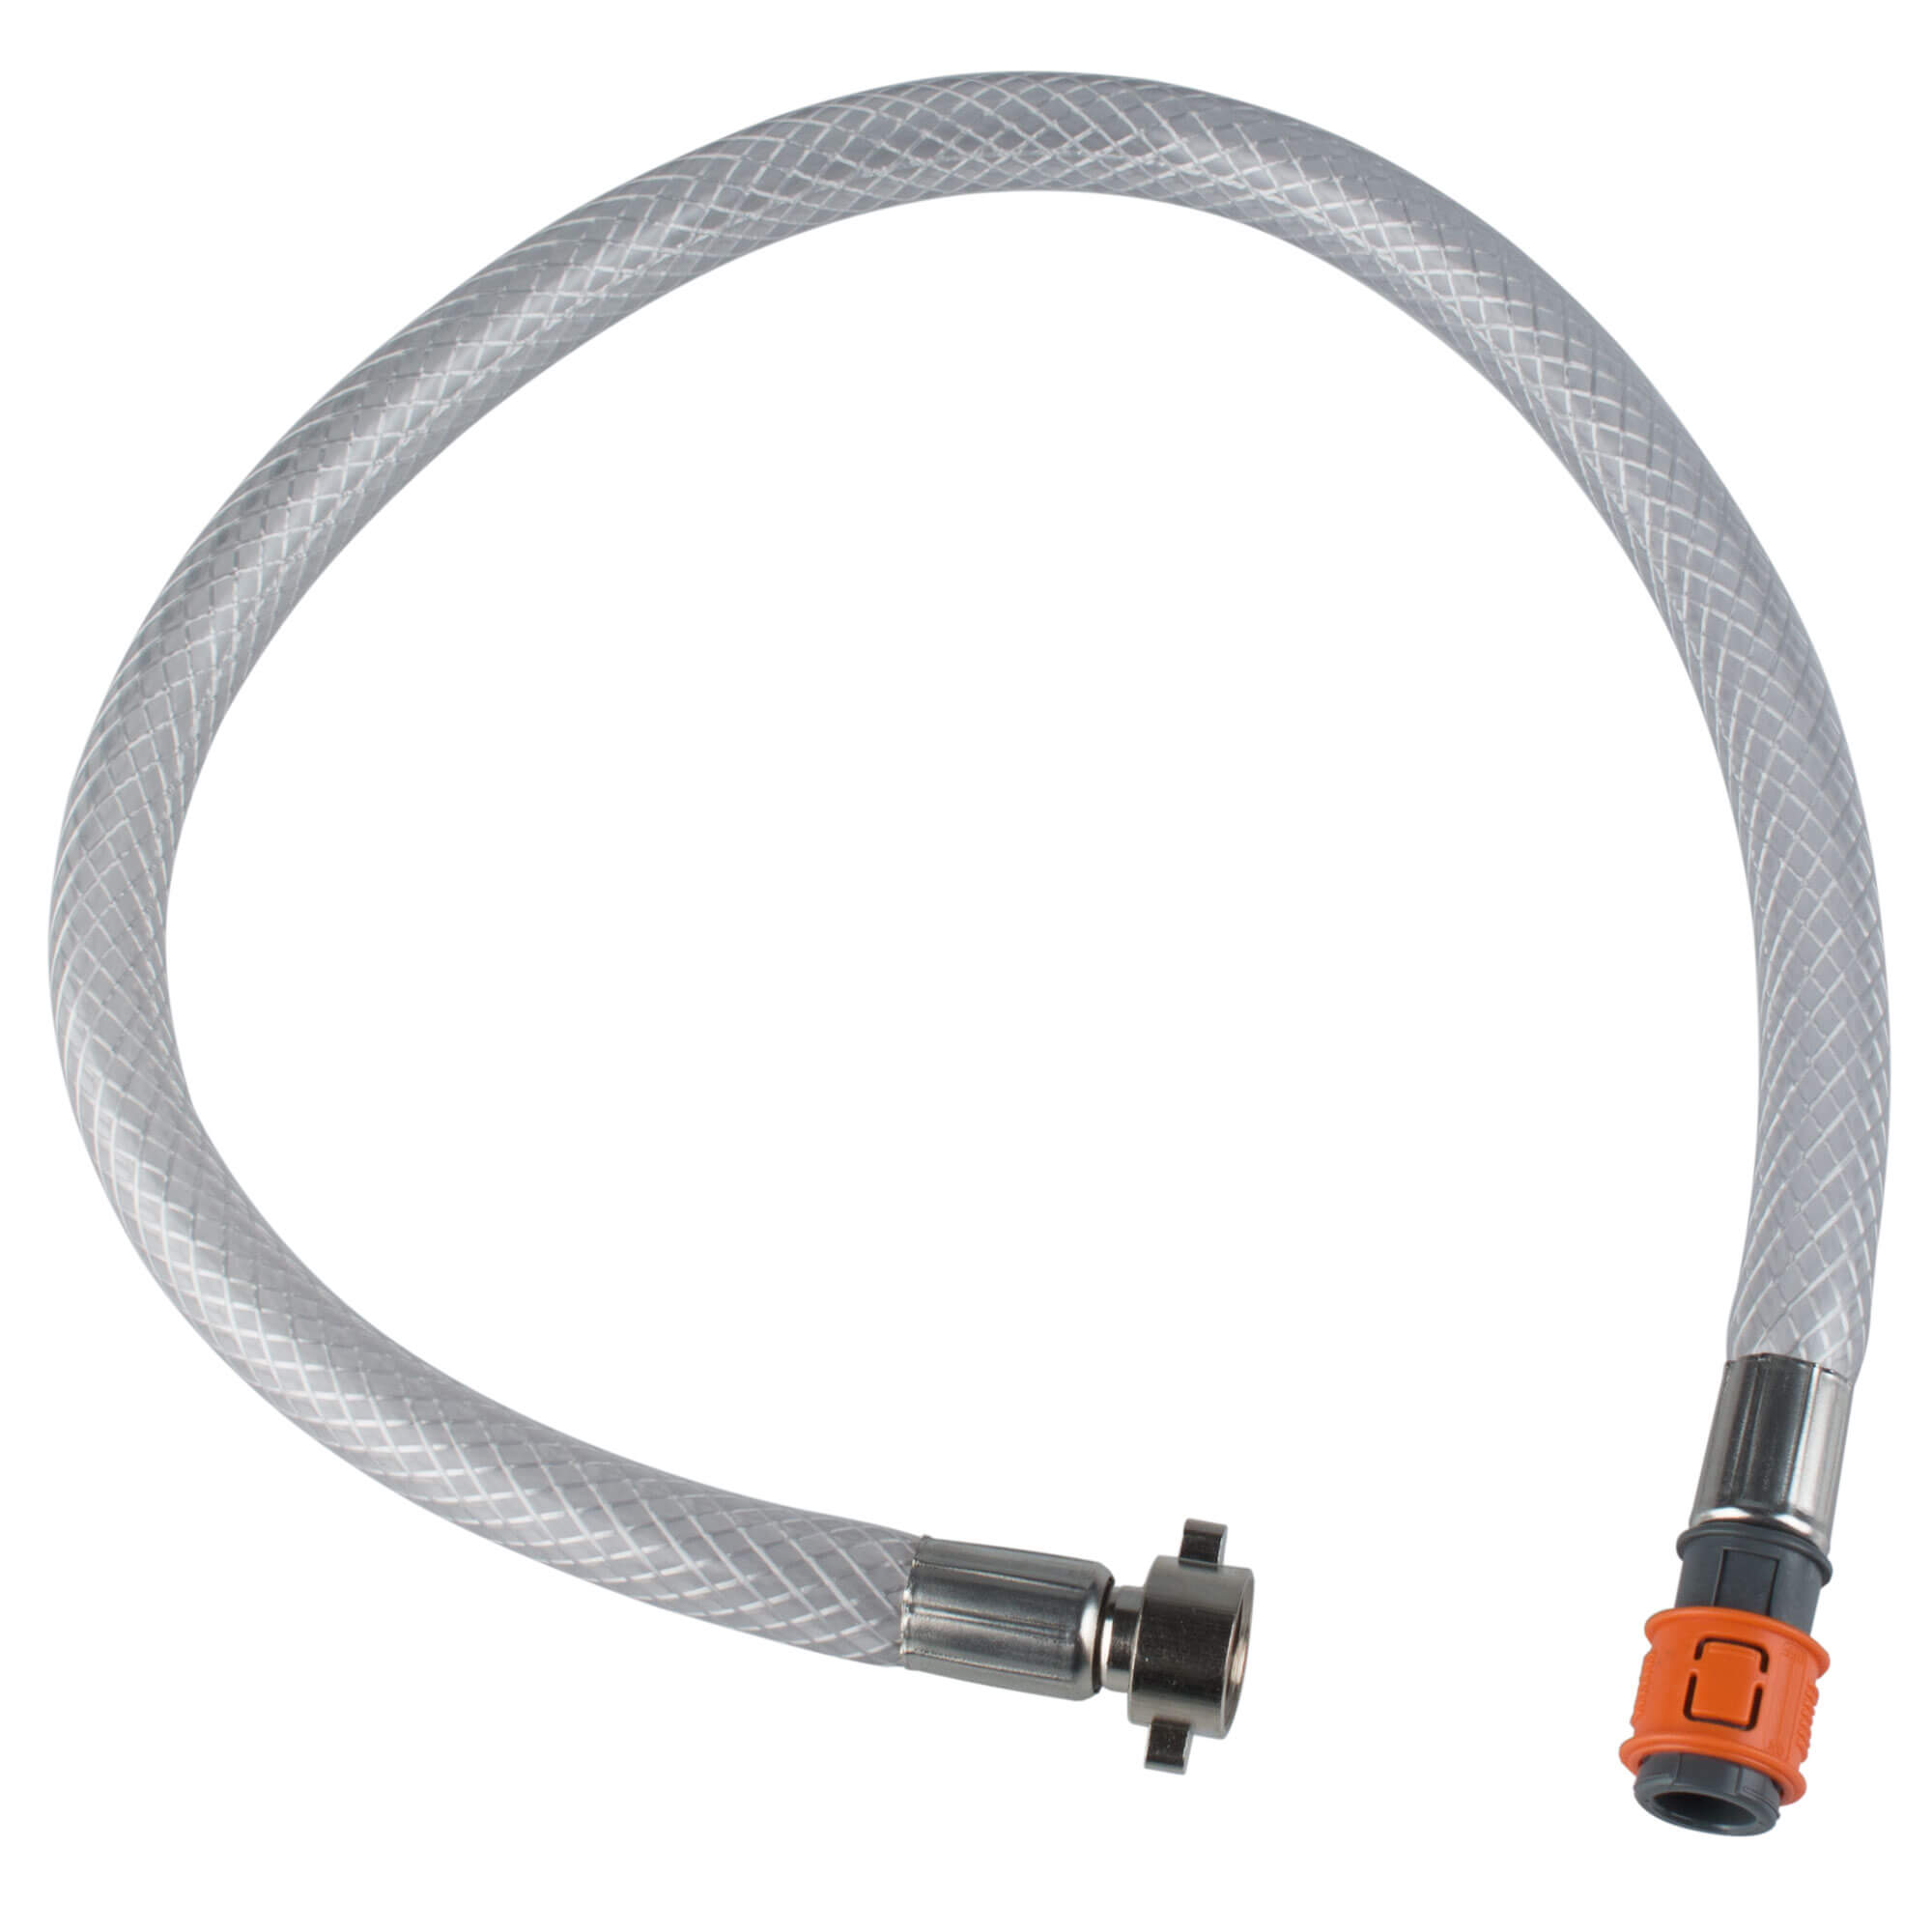 Spülboy connection hose easy clix - 3/8"